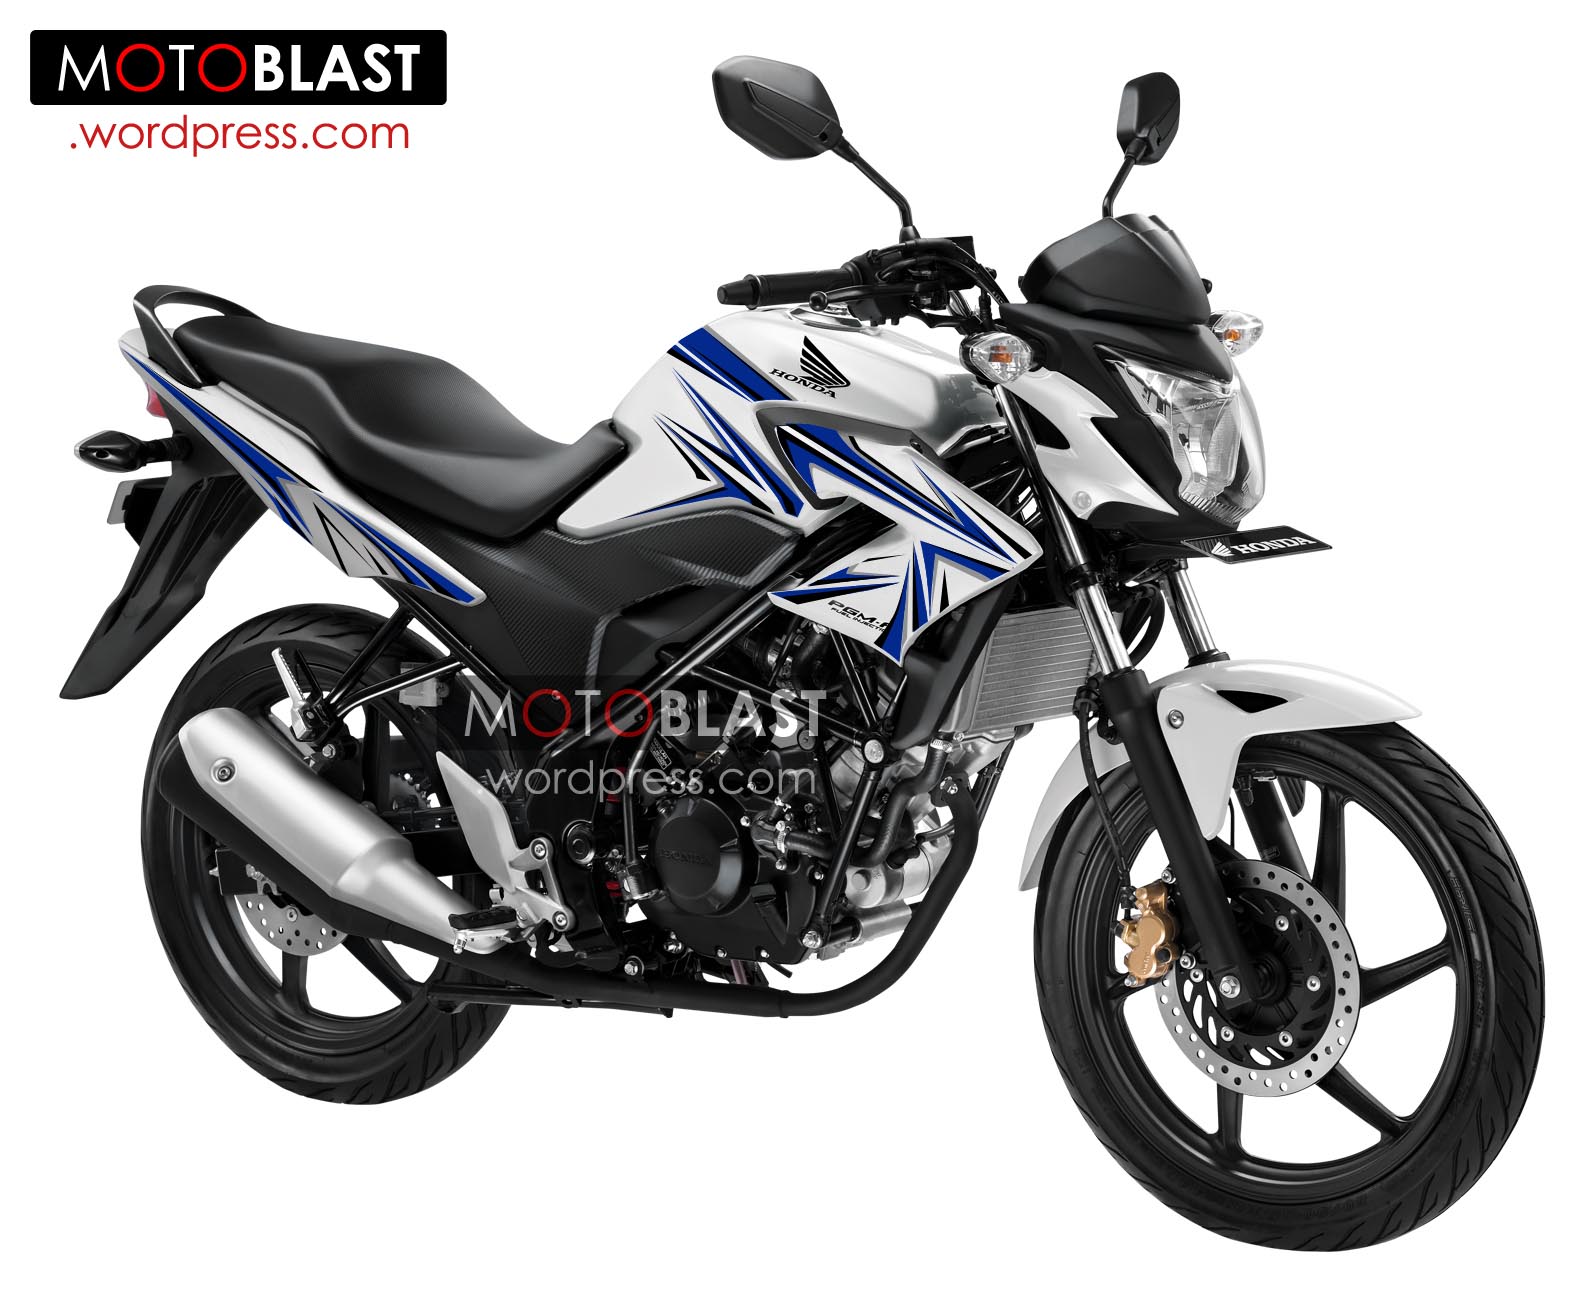 Honda CB150R Putih Biru Di Bali Semakin Gagah Dengan Striping Baru